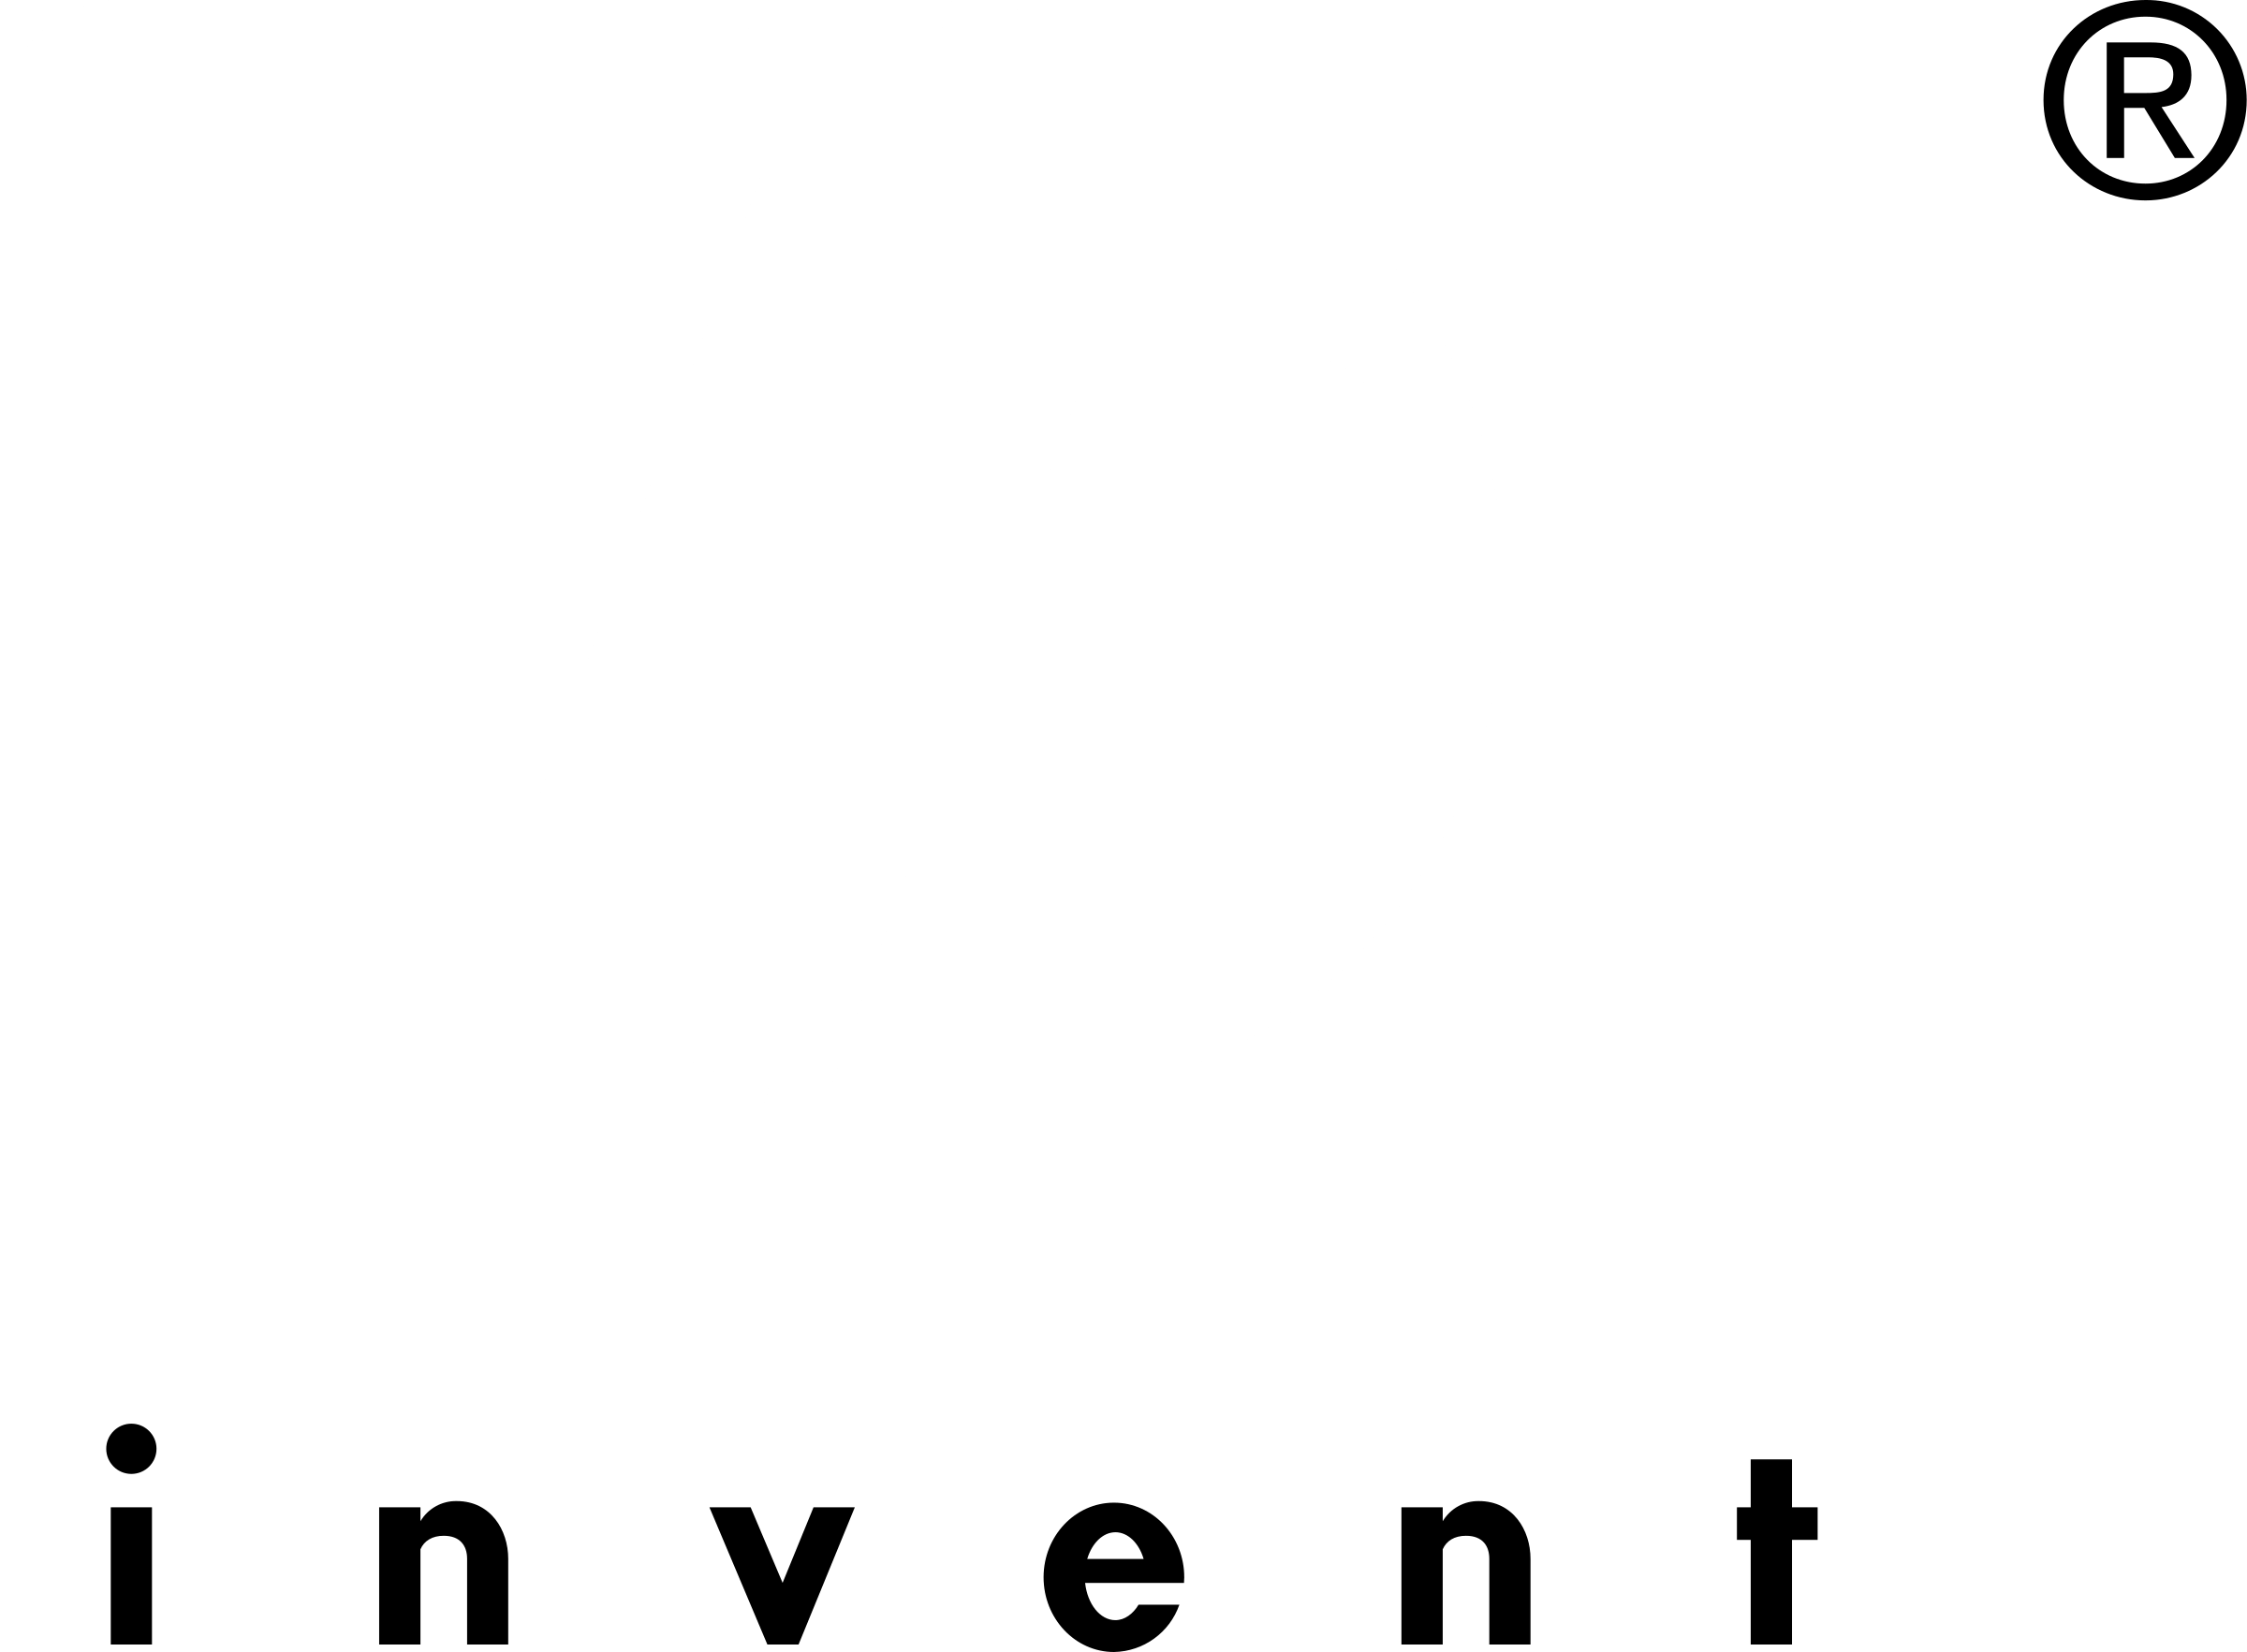 HP Invent Logo - HP INVENT 1 Logo PNG Transparent & SVG Vector - Freebie Supply